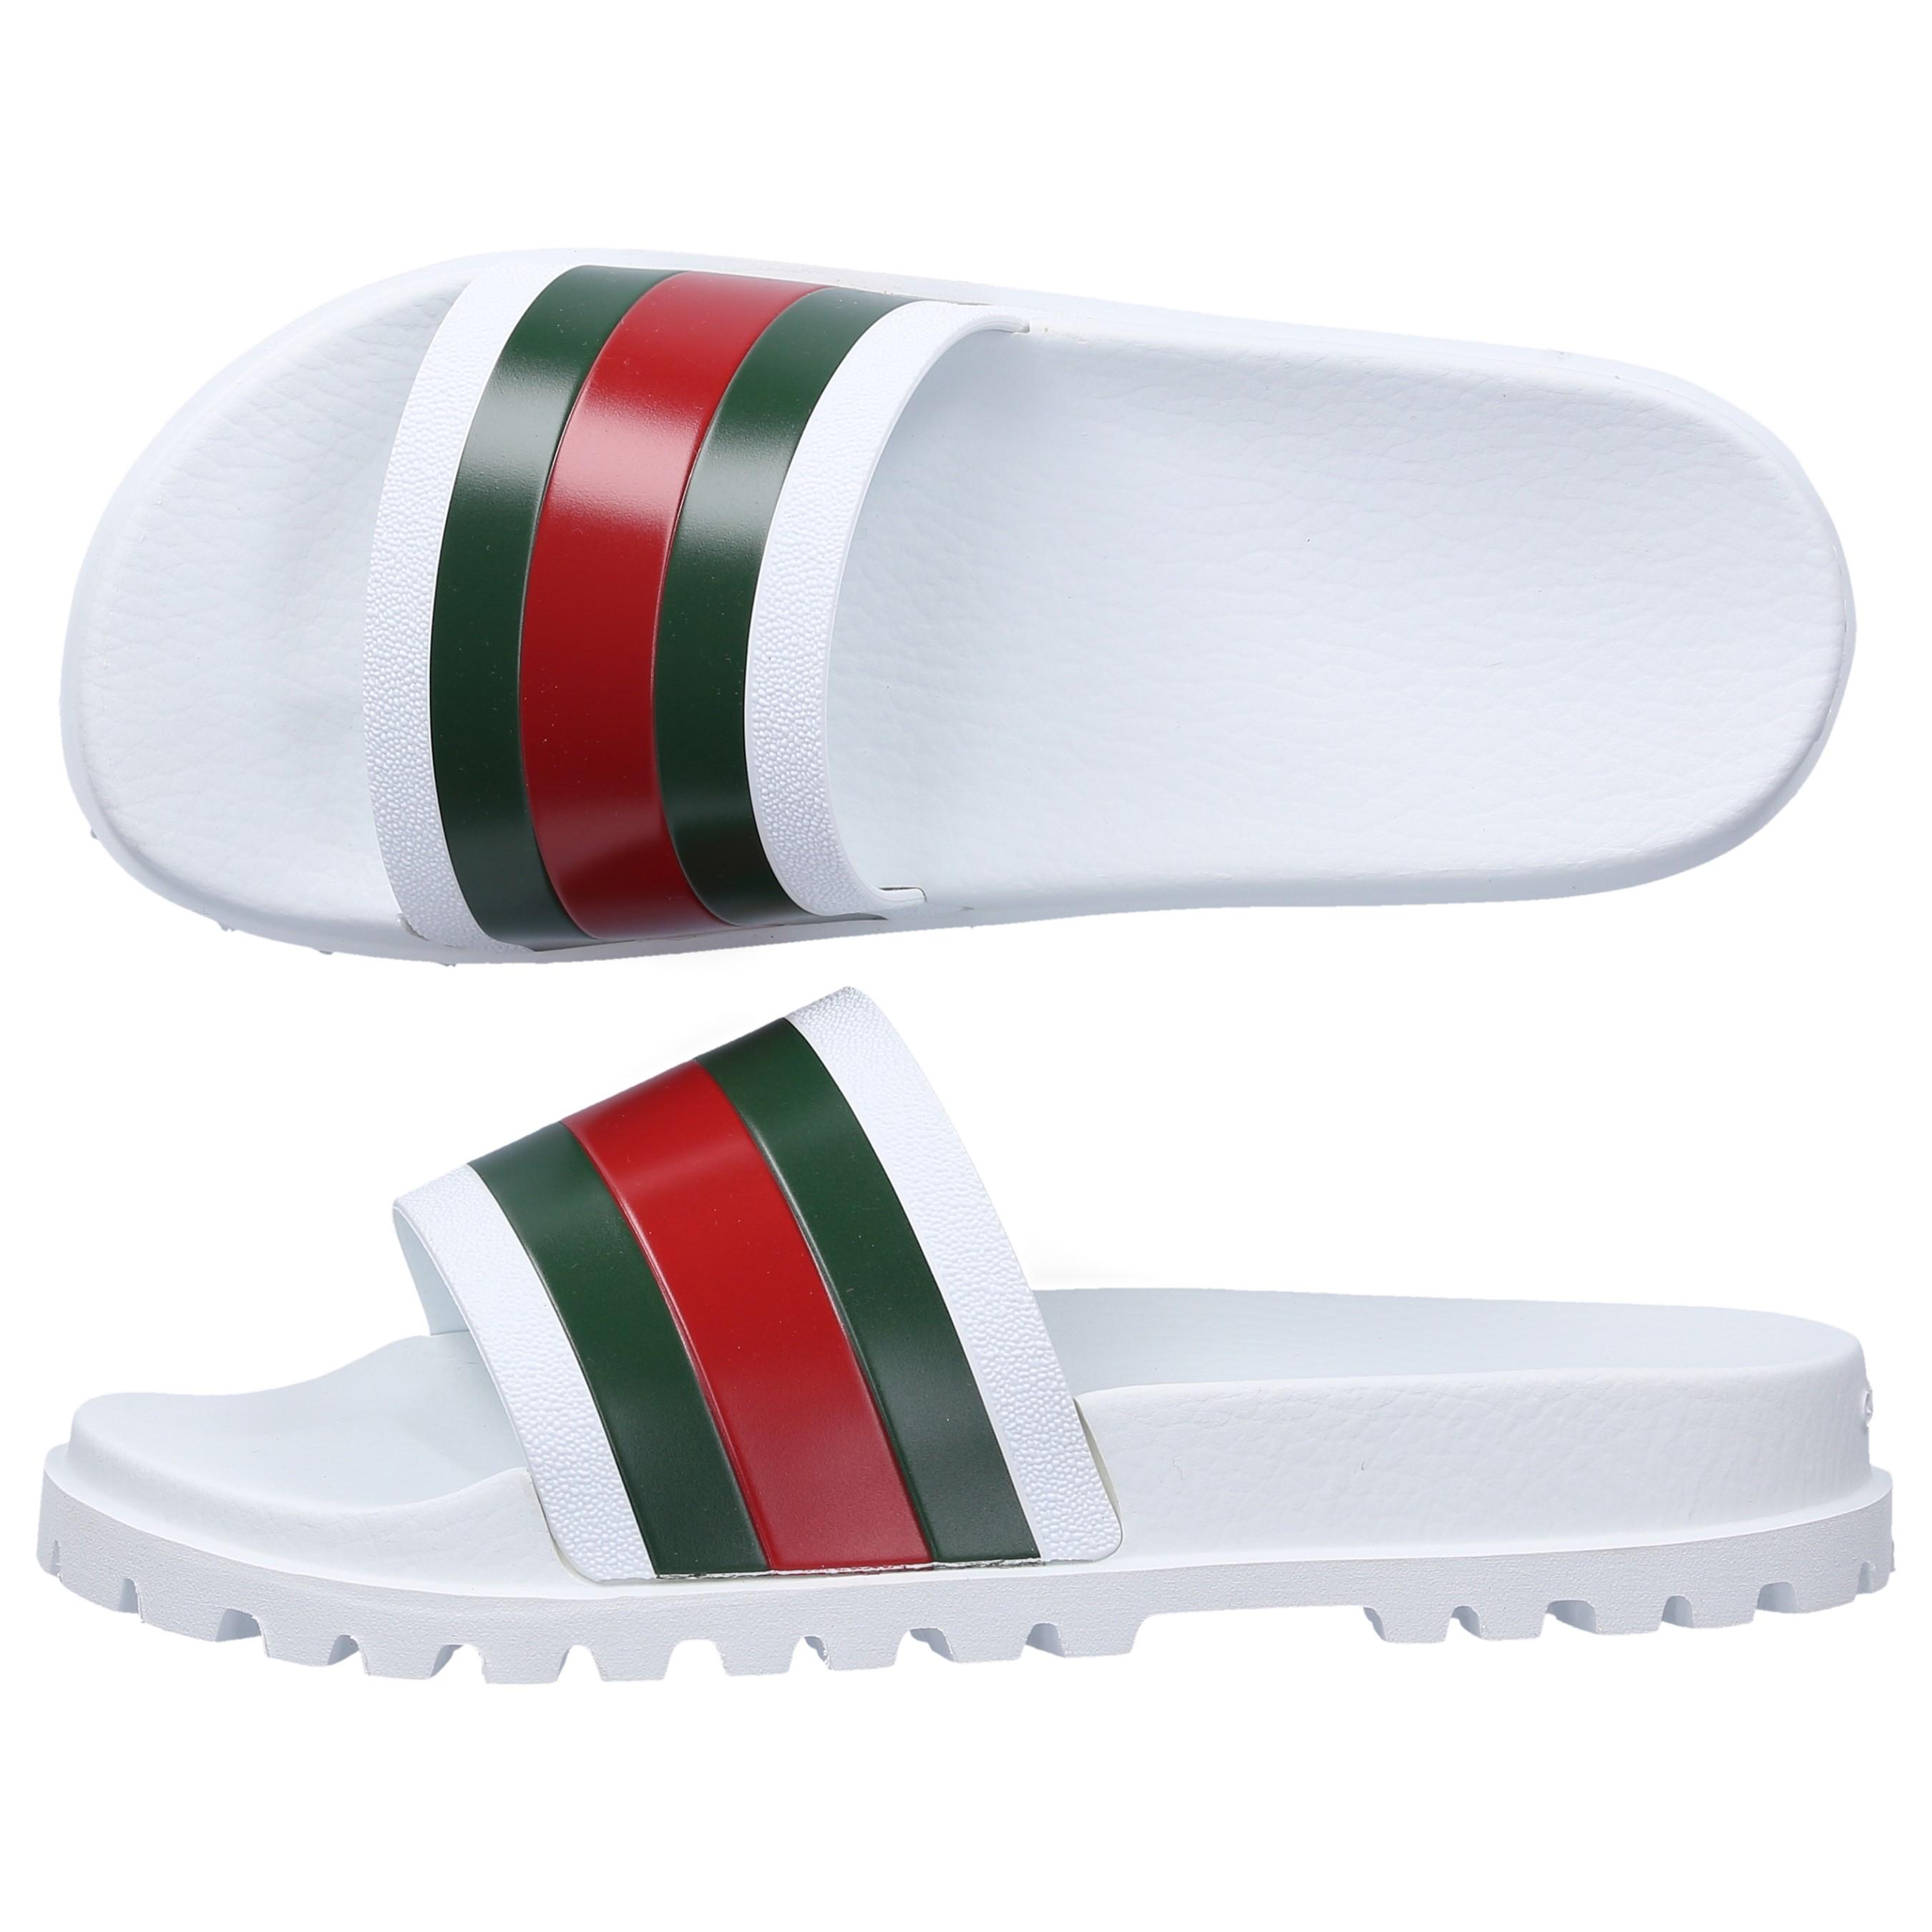 Gucci Beach Sandals Gib10 in White for Men - Lyst